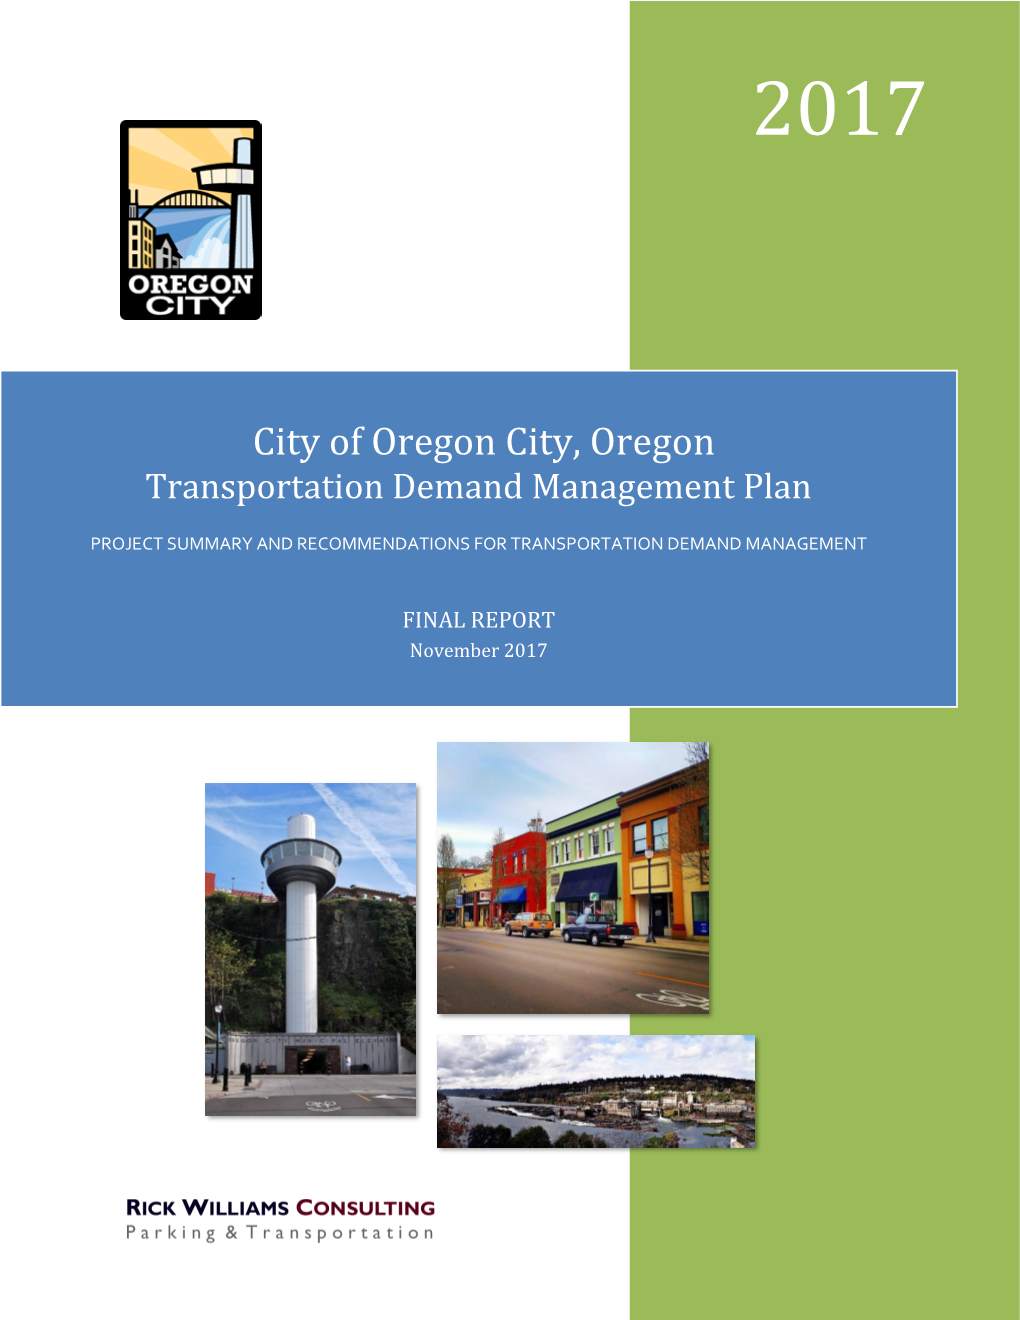 Adopted Transportation Demand Management